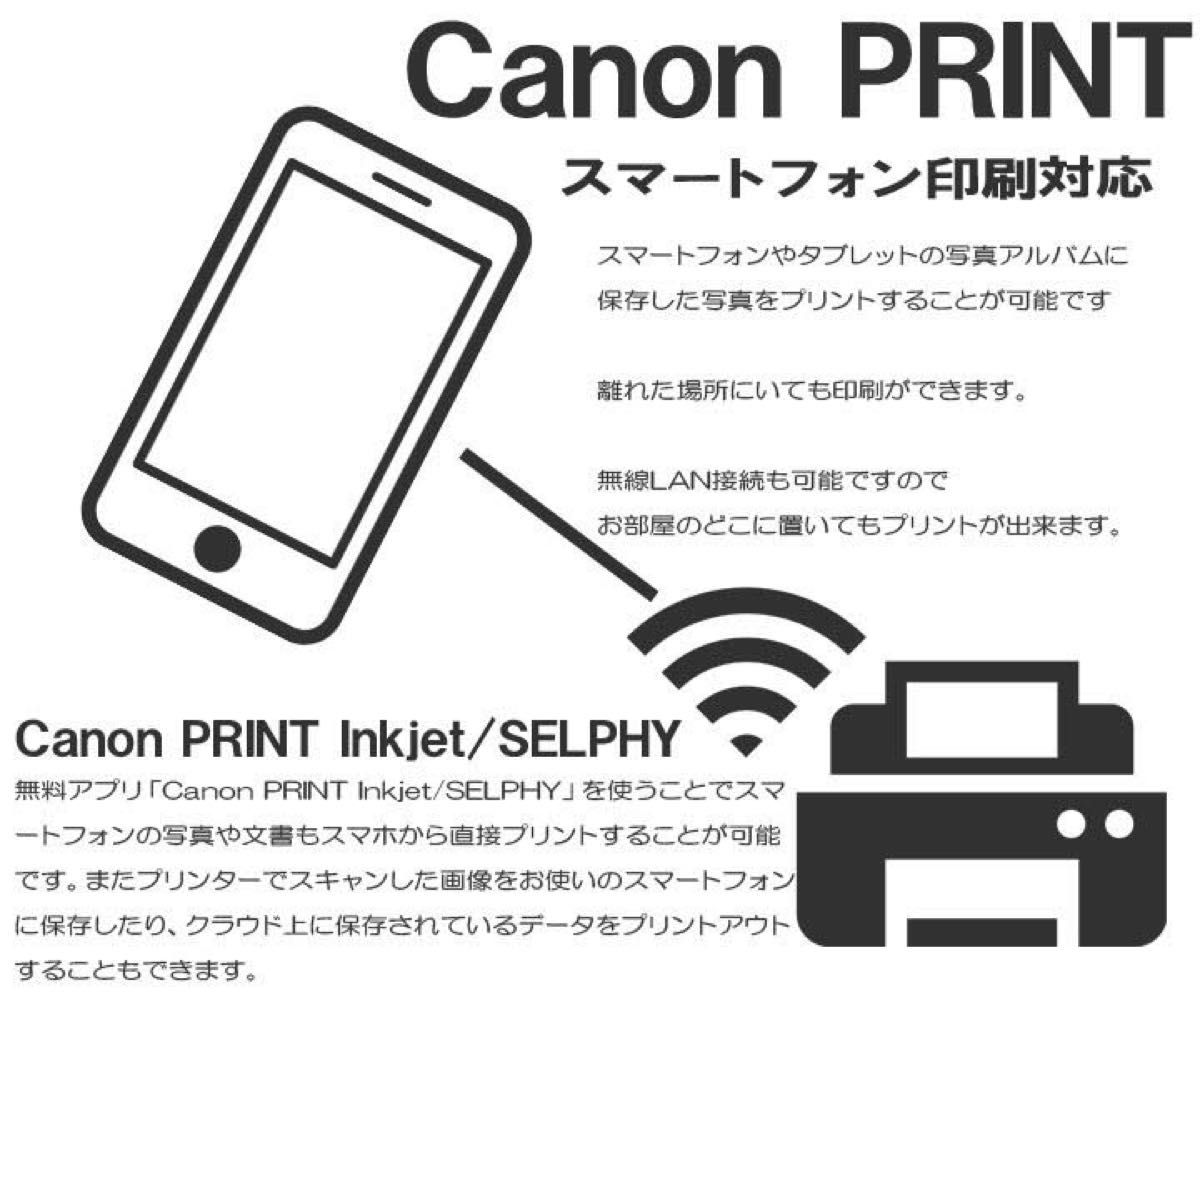 TS3530 キャノン CANON PIXUS 新品未使用 プリンター 本体 コピー機 複合機 スキャナー 印刷機 DL59